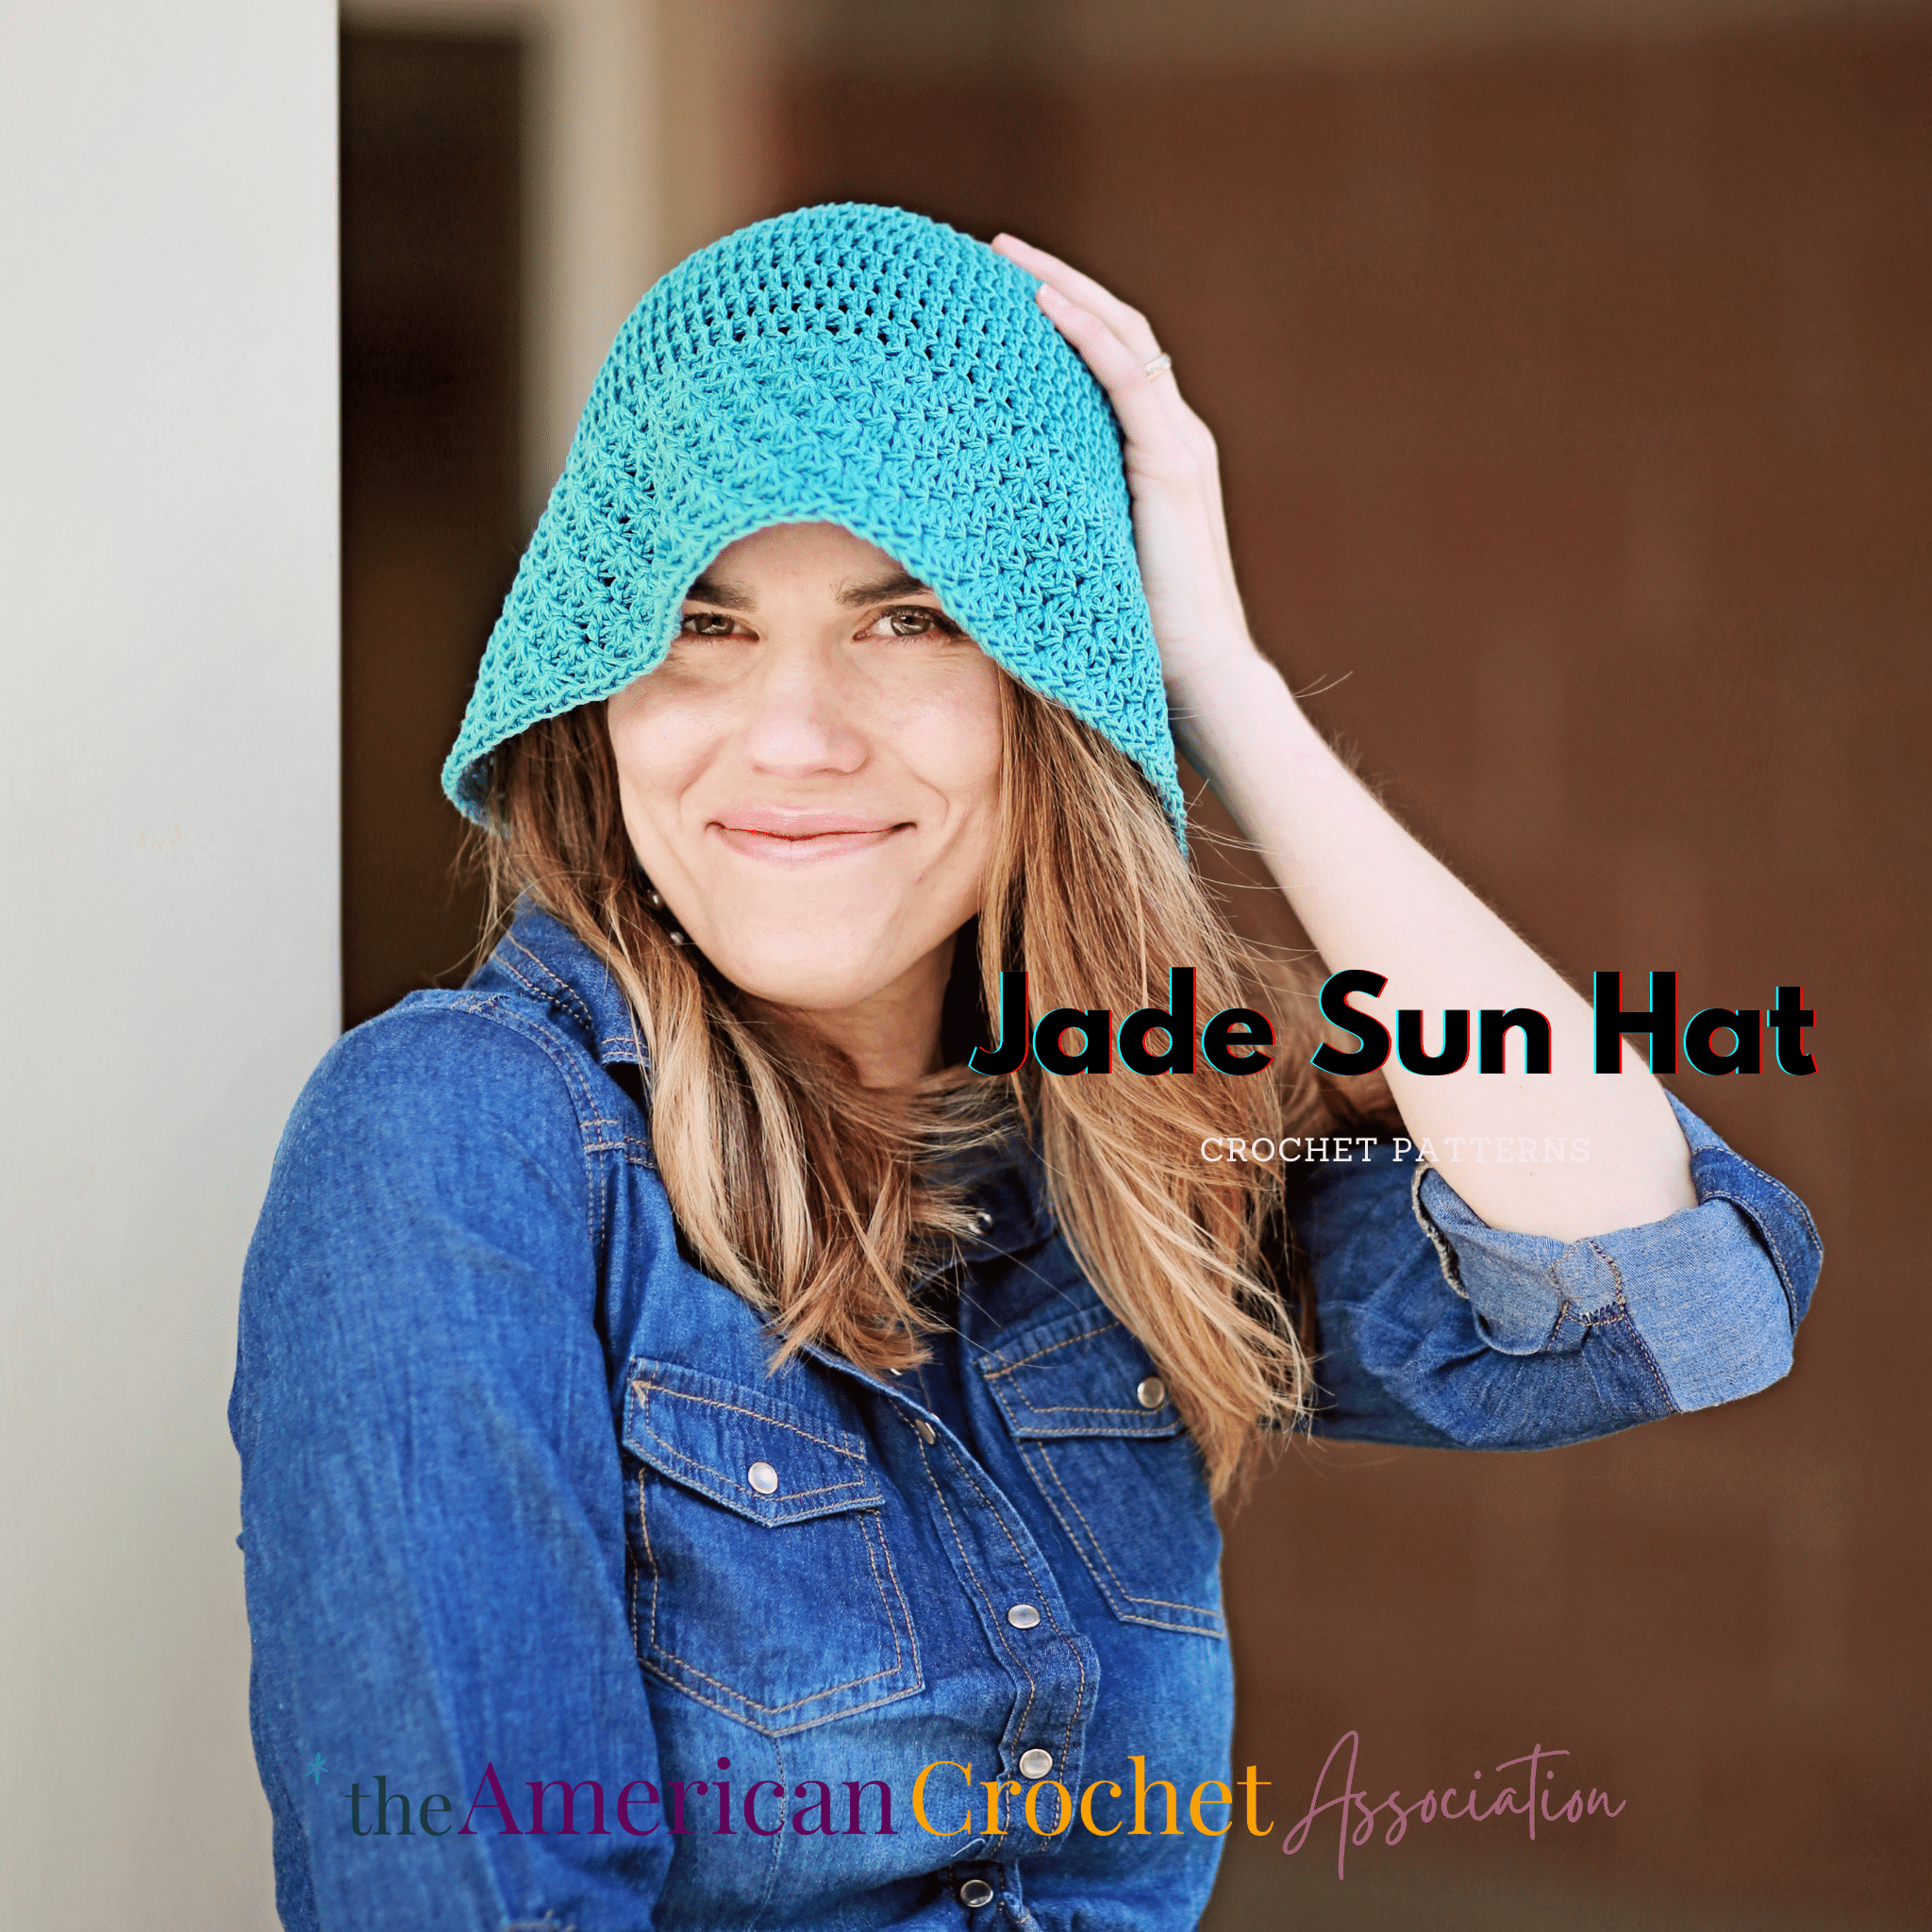 Jade Sun Hat Crochet Pattern - American Crochet Association